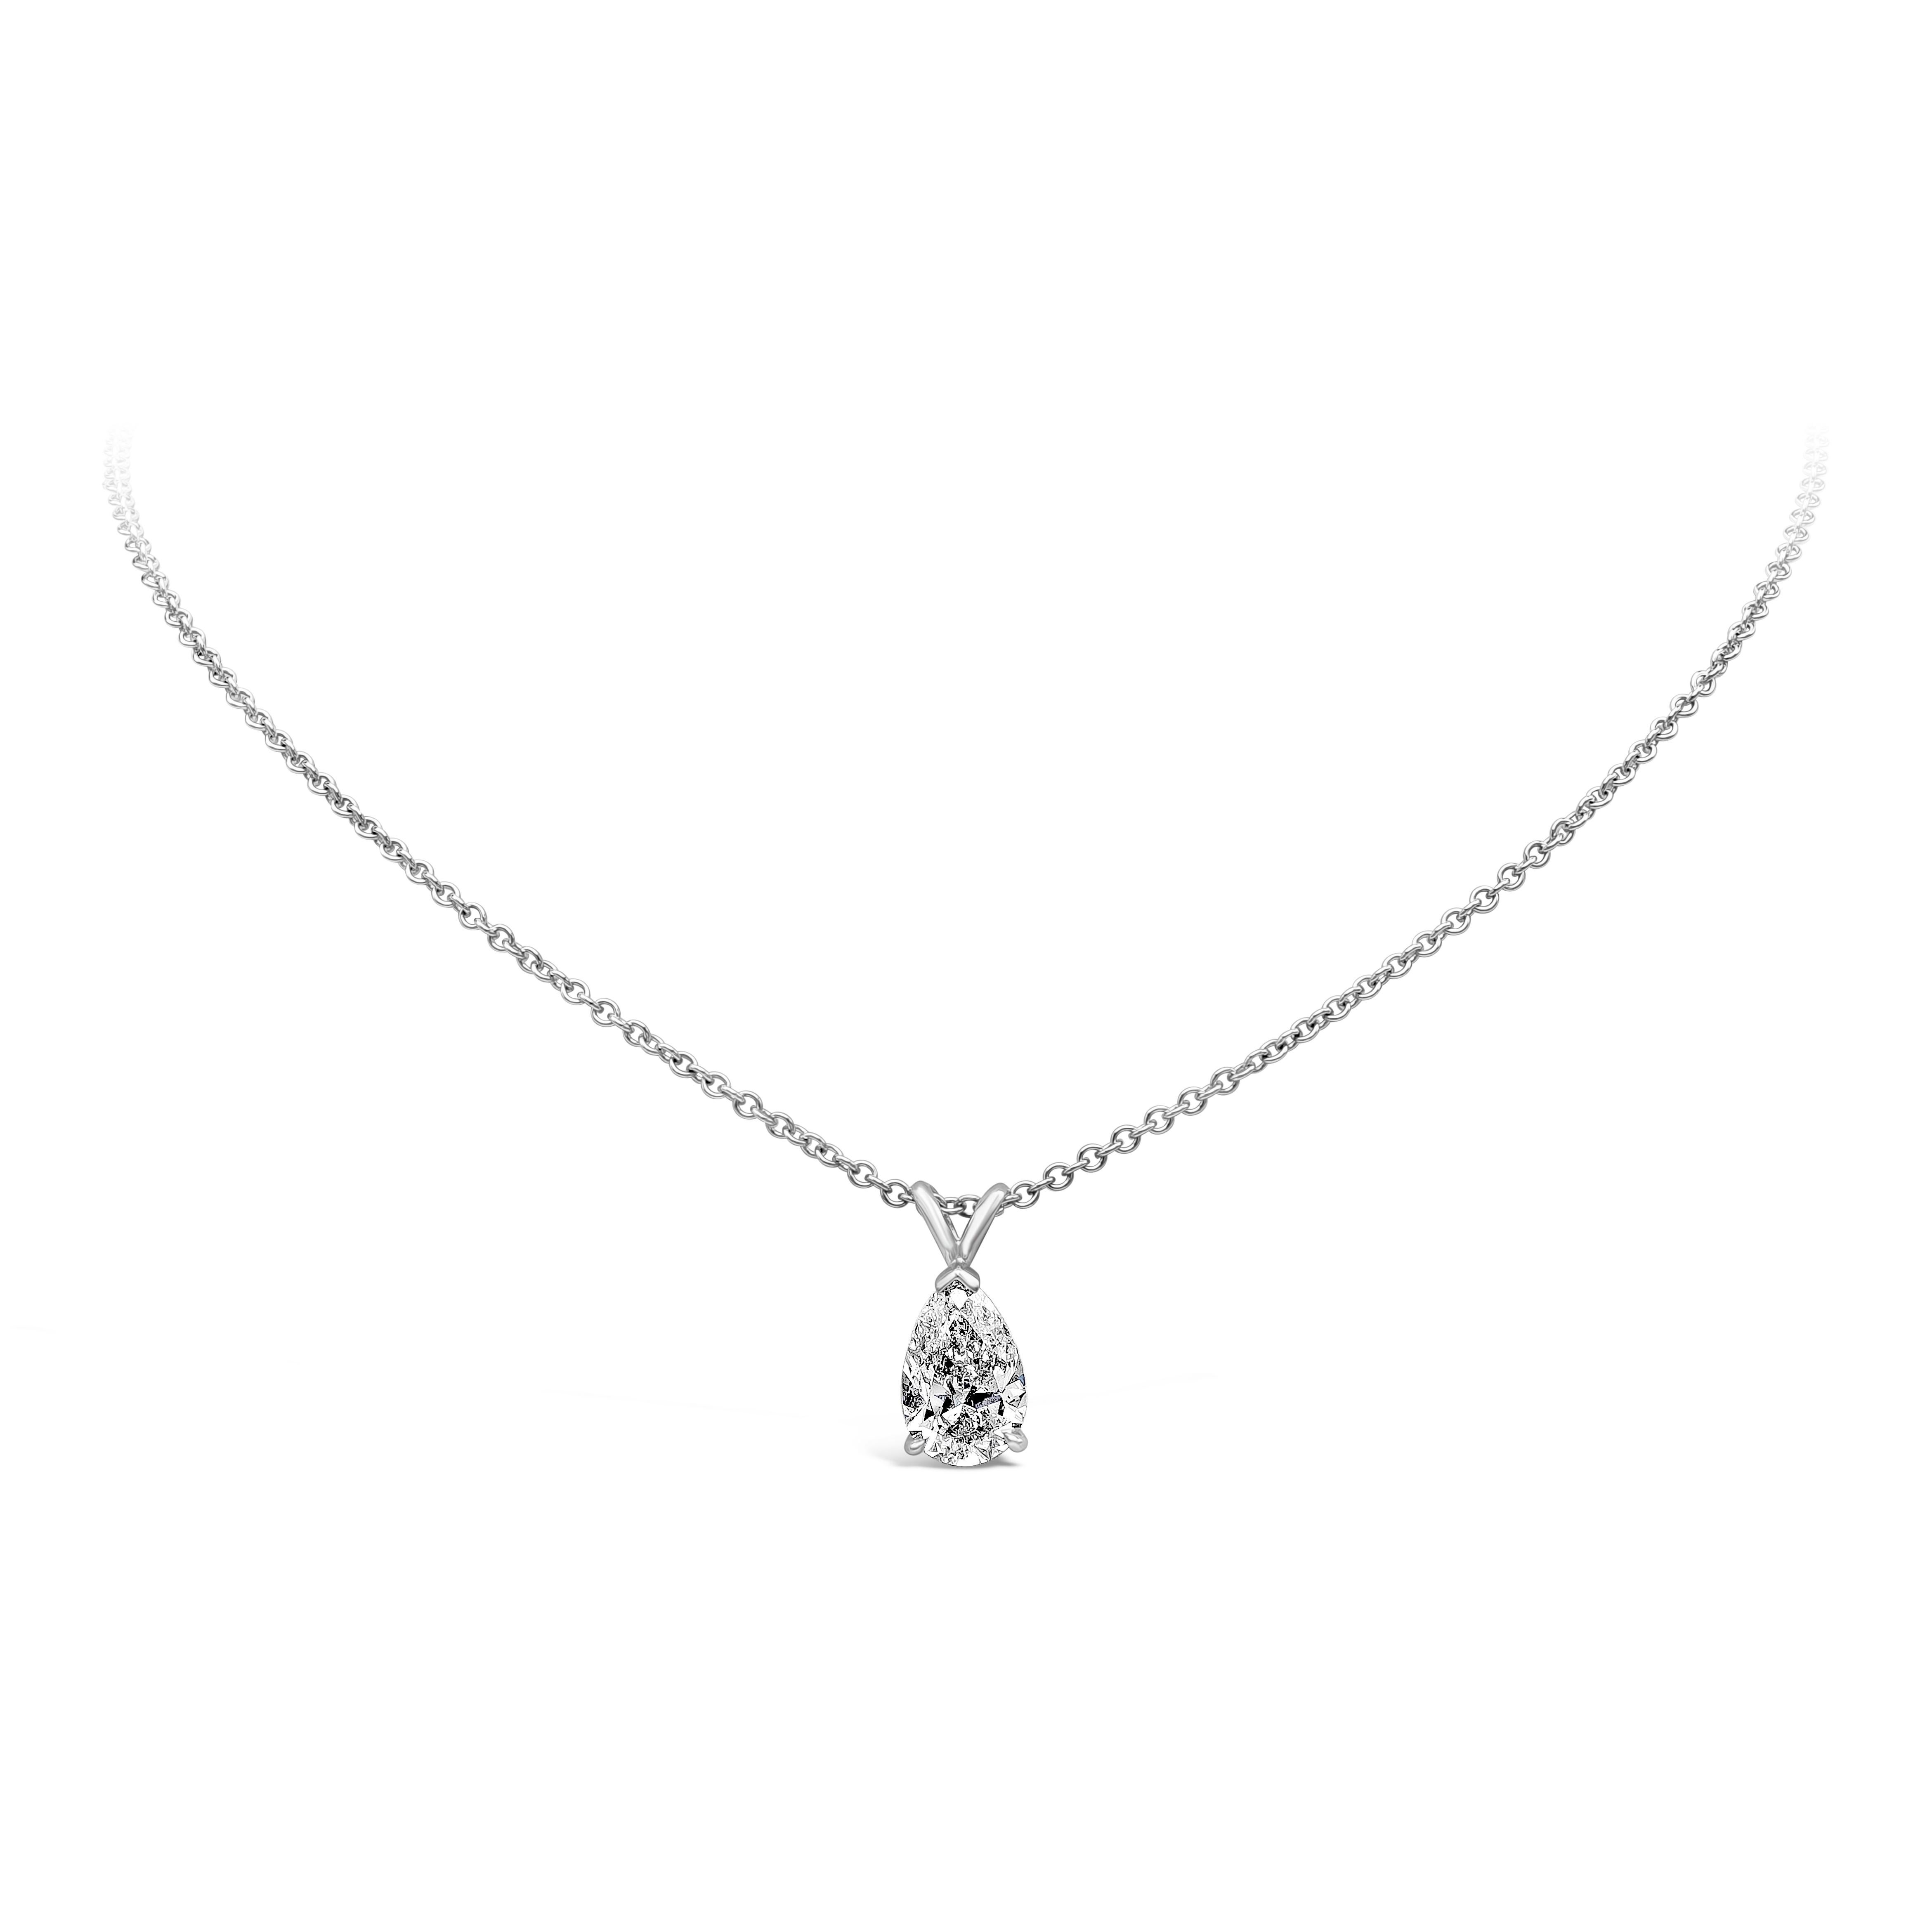 2 carat pear shaped diamond necklace